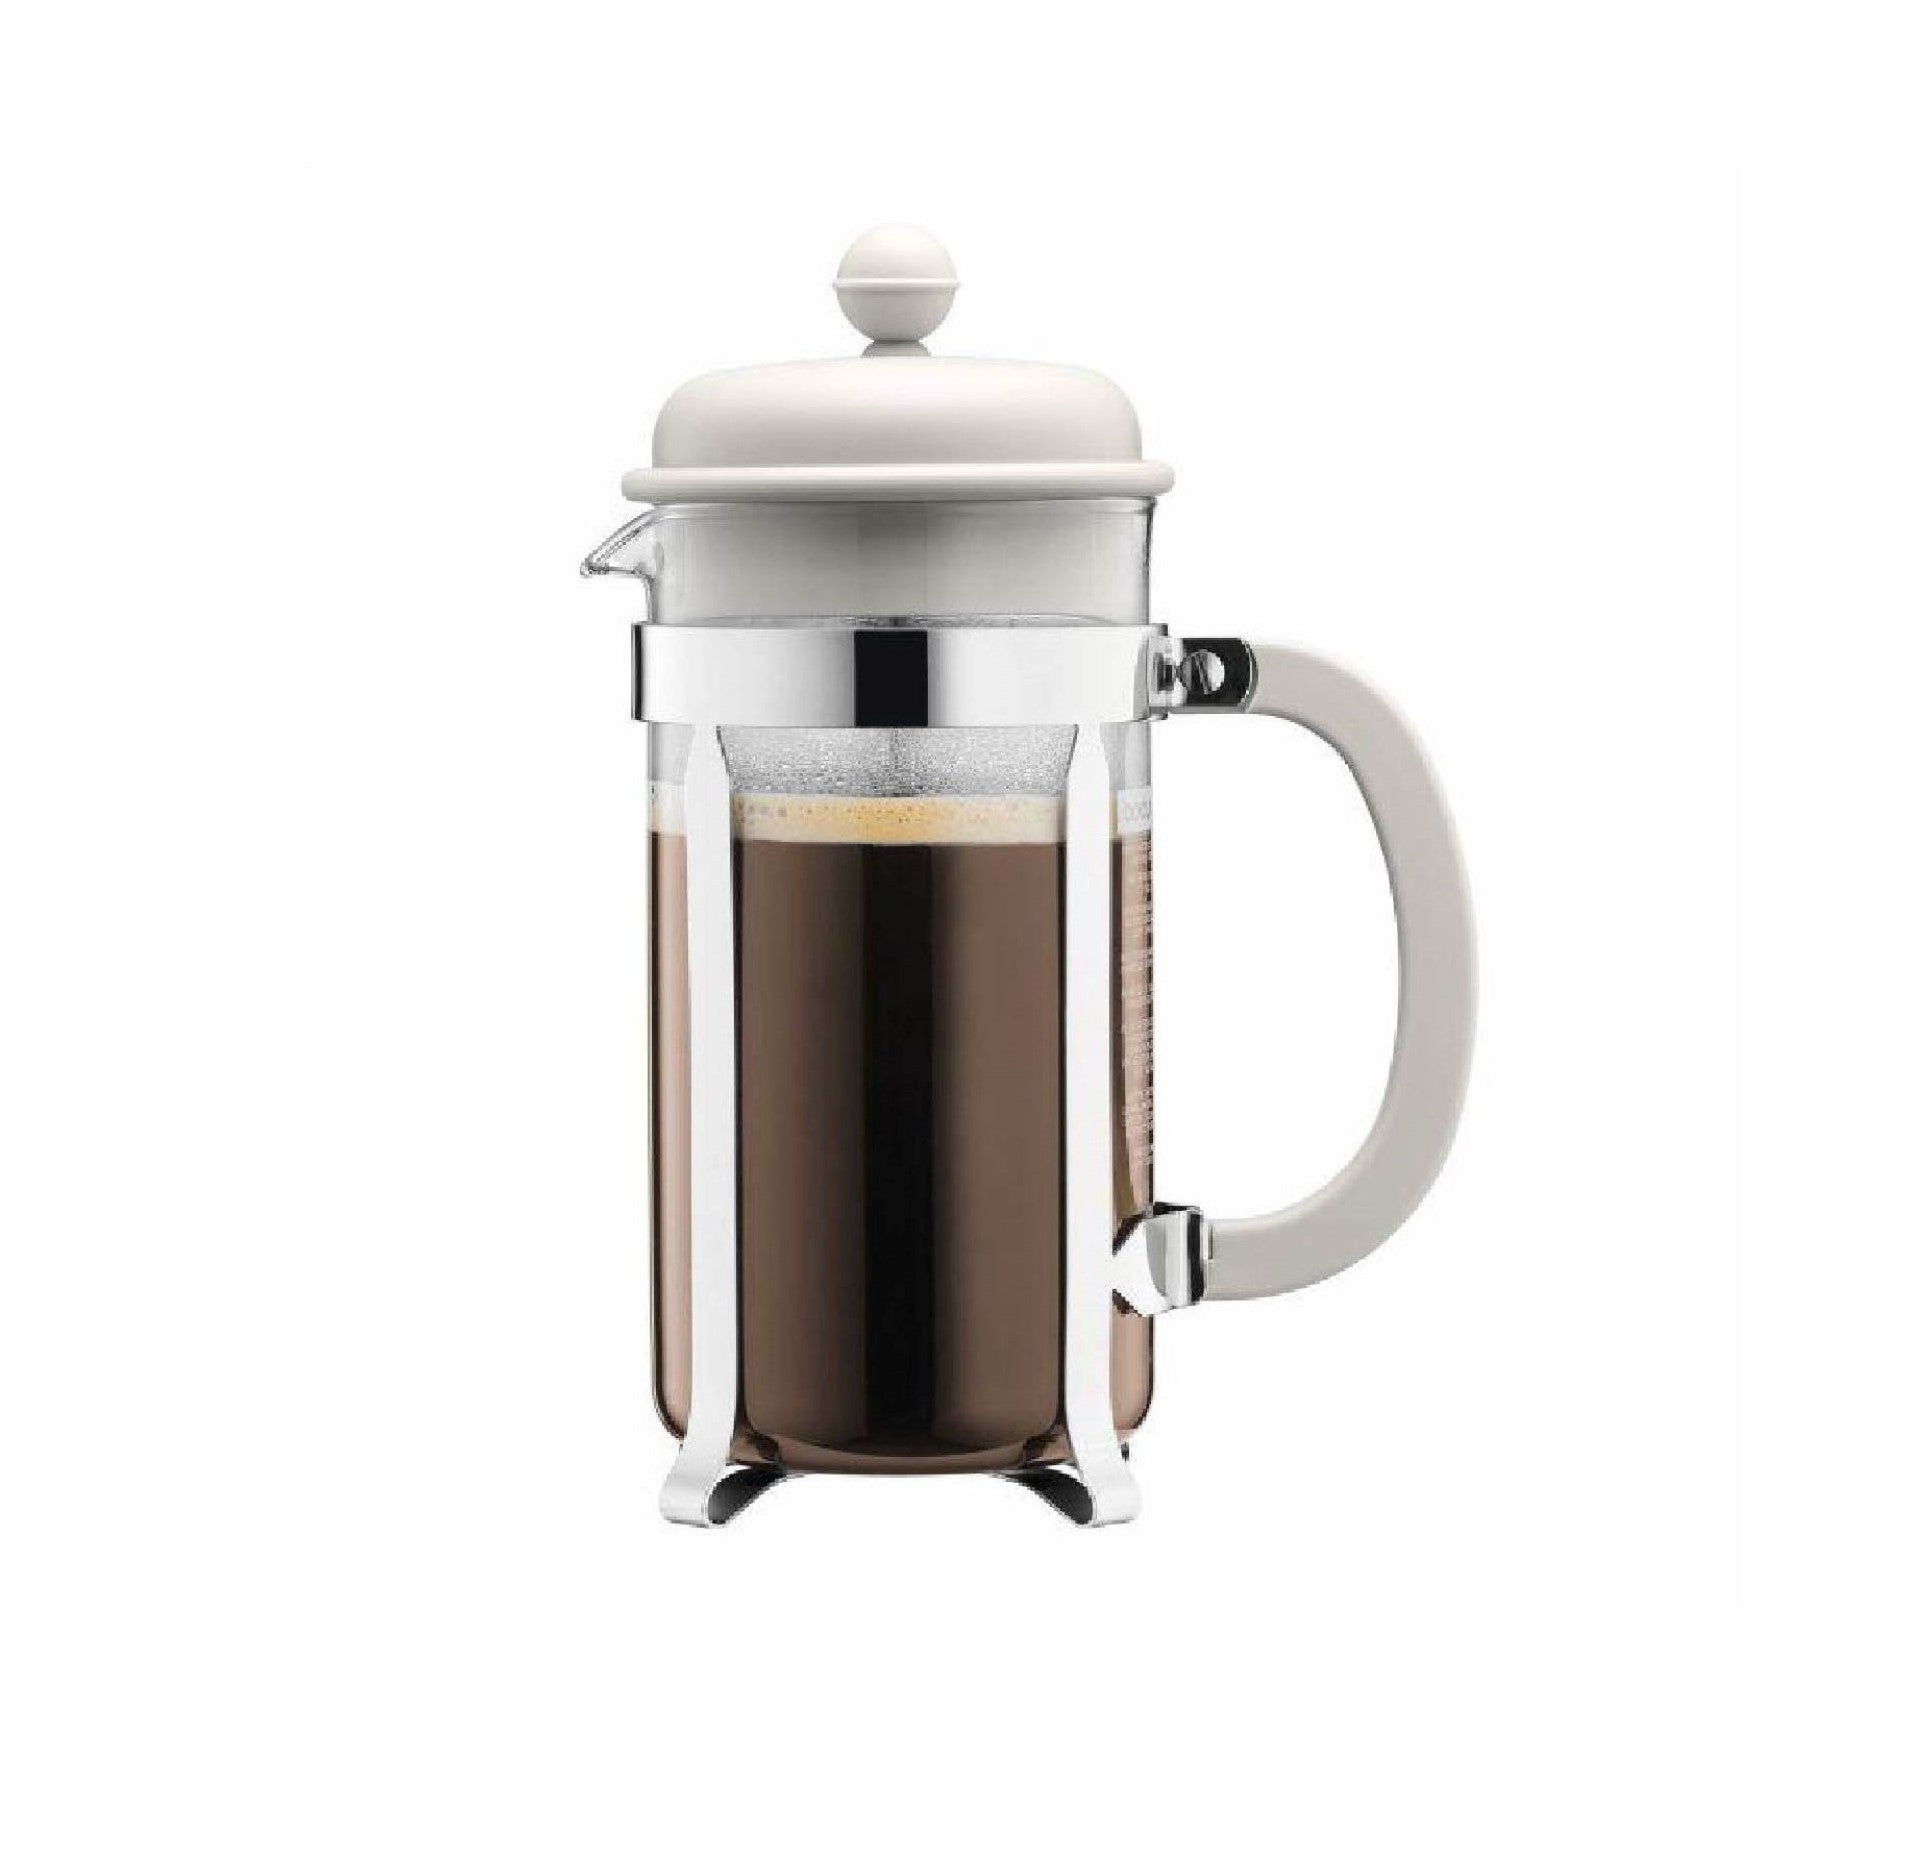 BODUM Chambord 8 Cup French Press Coffee Maker, Chrome, 1.0 l, 34